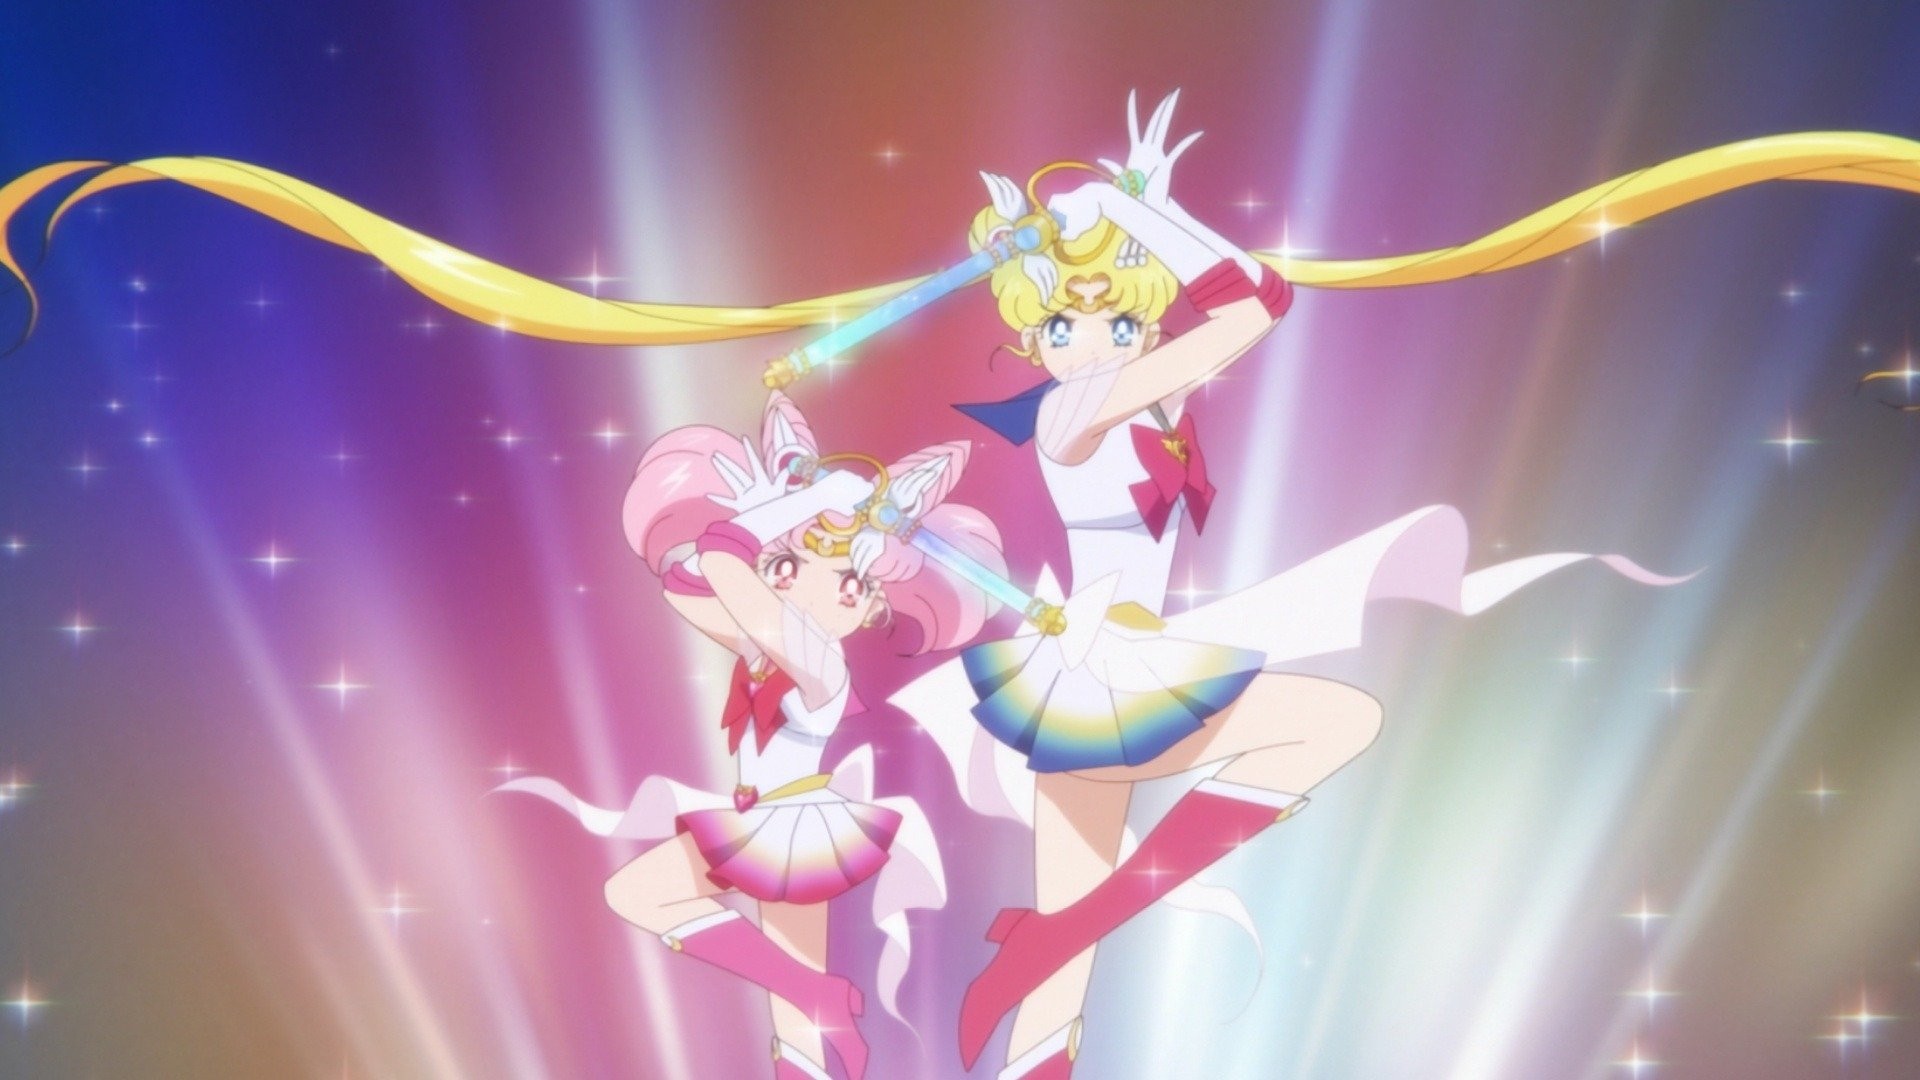 Sailor Moon (Season 1 - 5 + Crystal + 3 Movie + Eternal 1&2) ~ English  Version ~